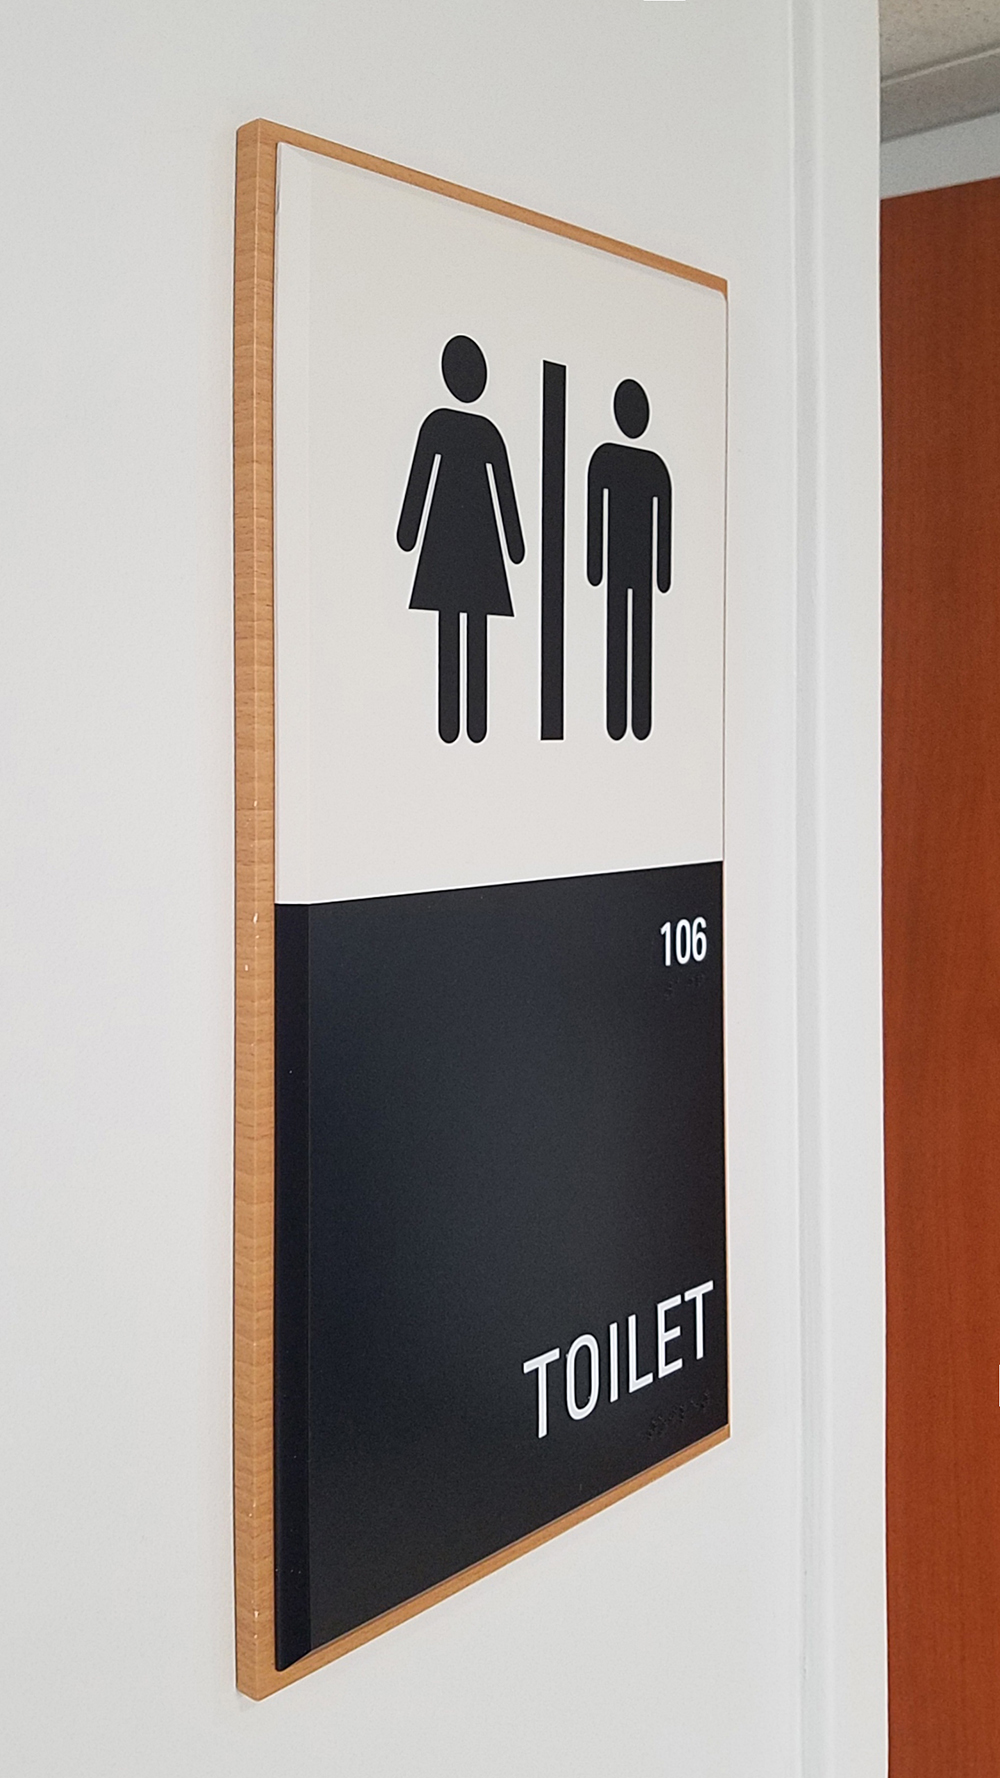 Wayfinding public toilet sign